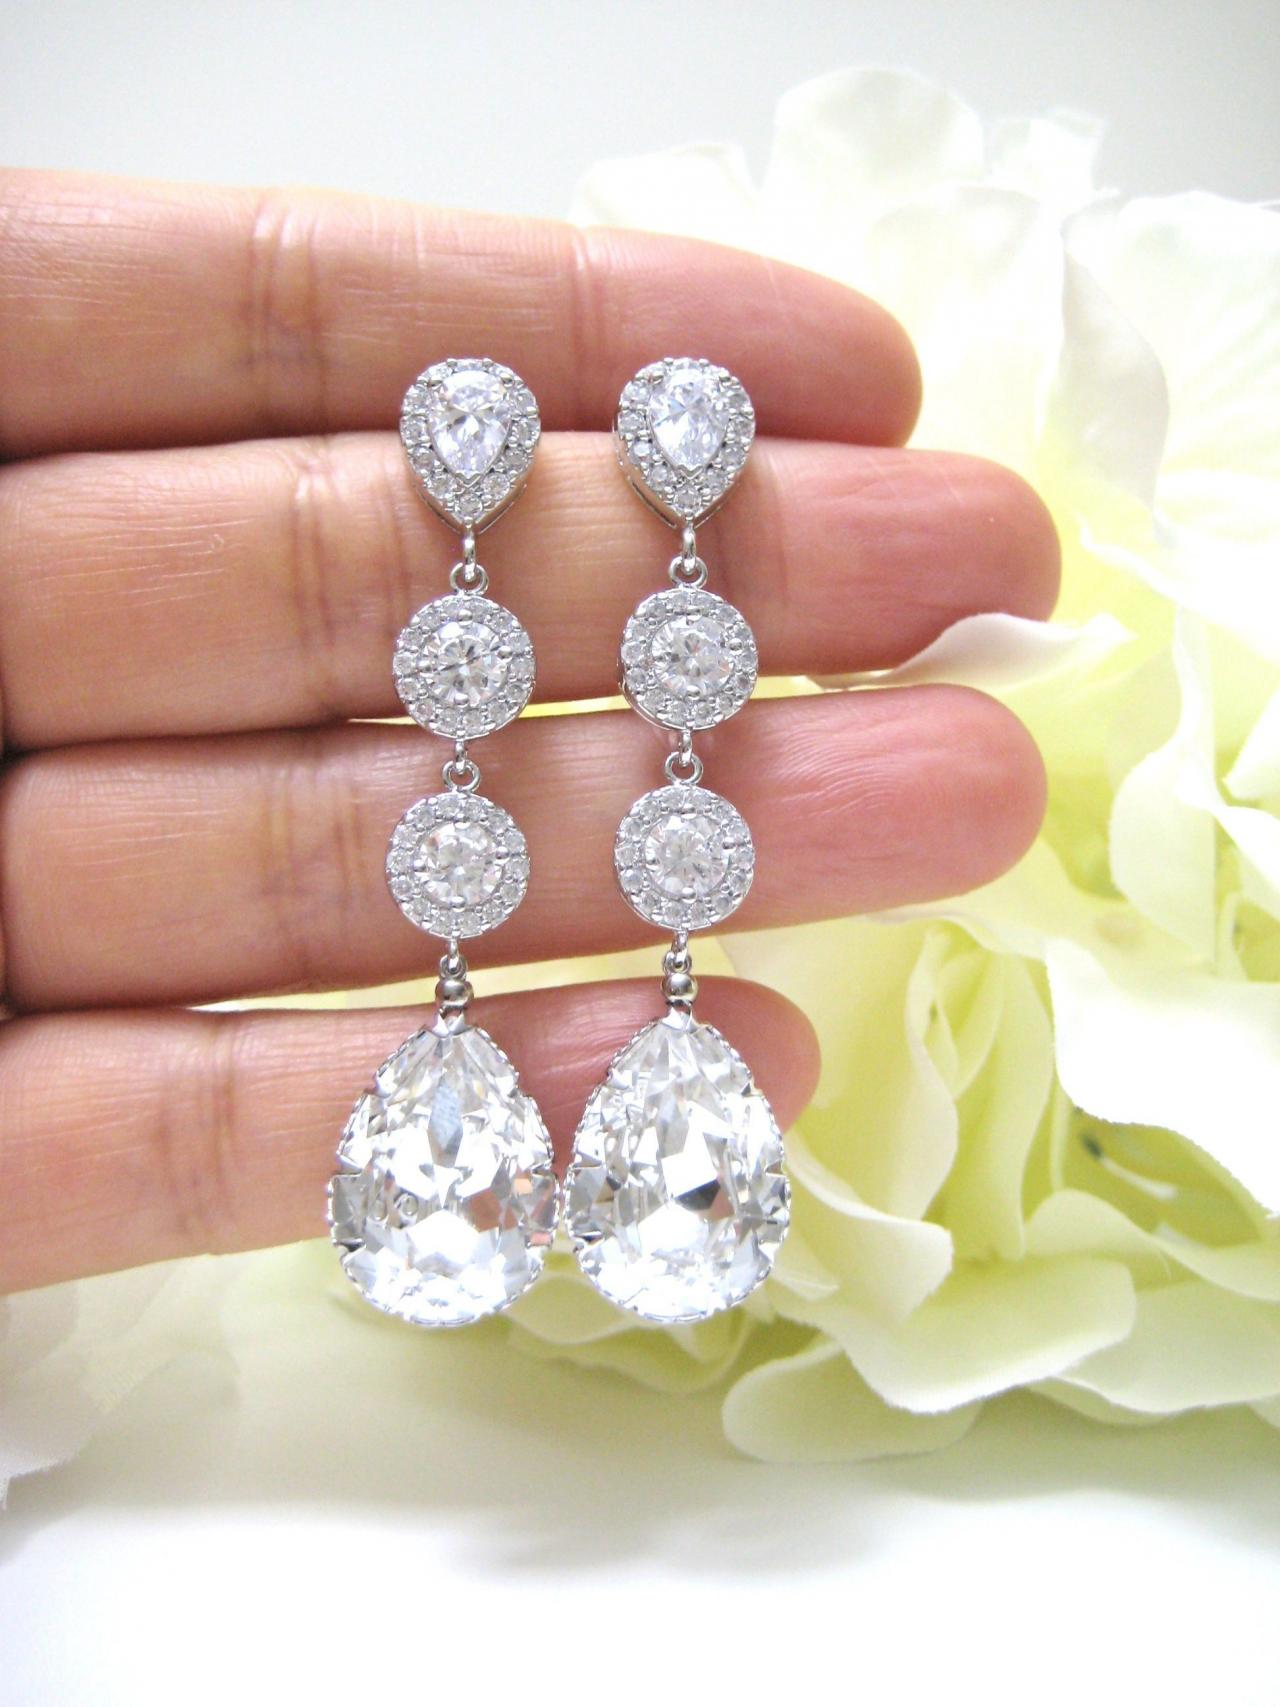 Bridal Crystal Earrings Swarovski Clear White Crystal Teardrop Earrings Wedding Jewelry Bridesmaid Gift Bridal Long Earrings(e142)